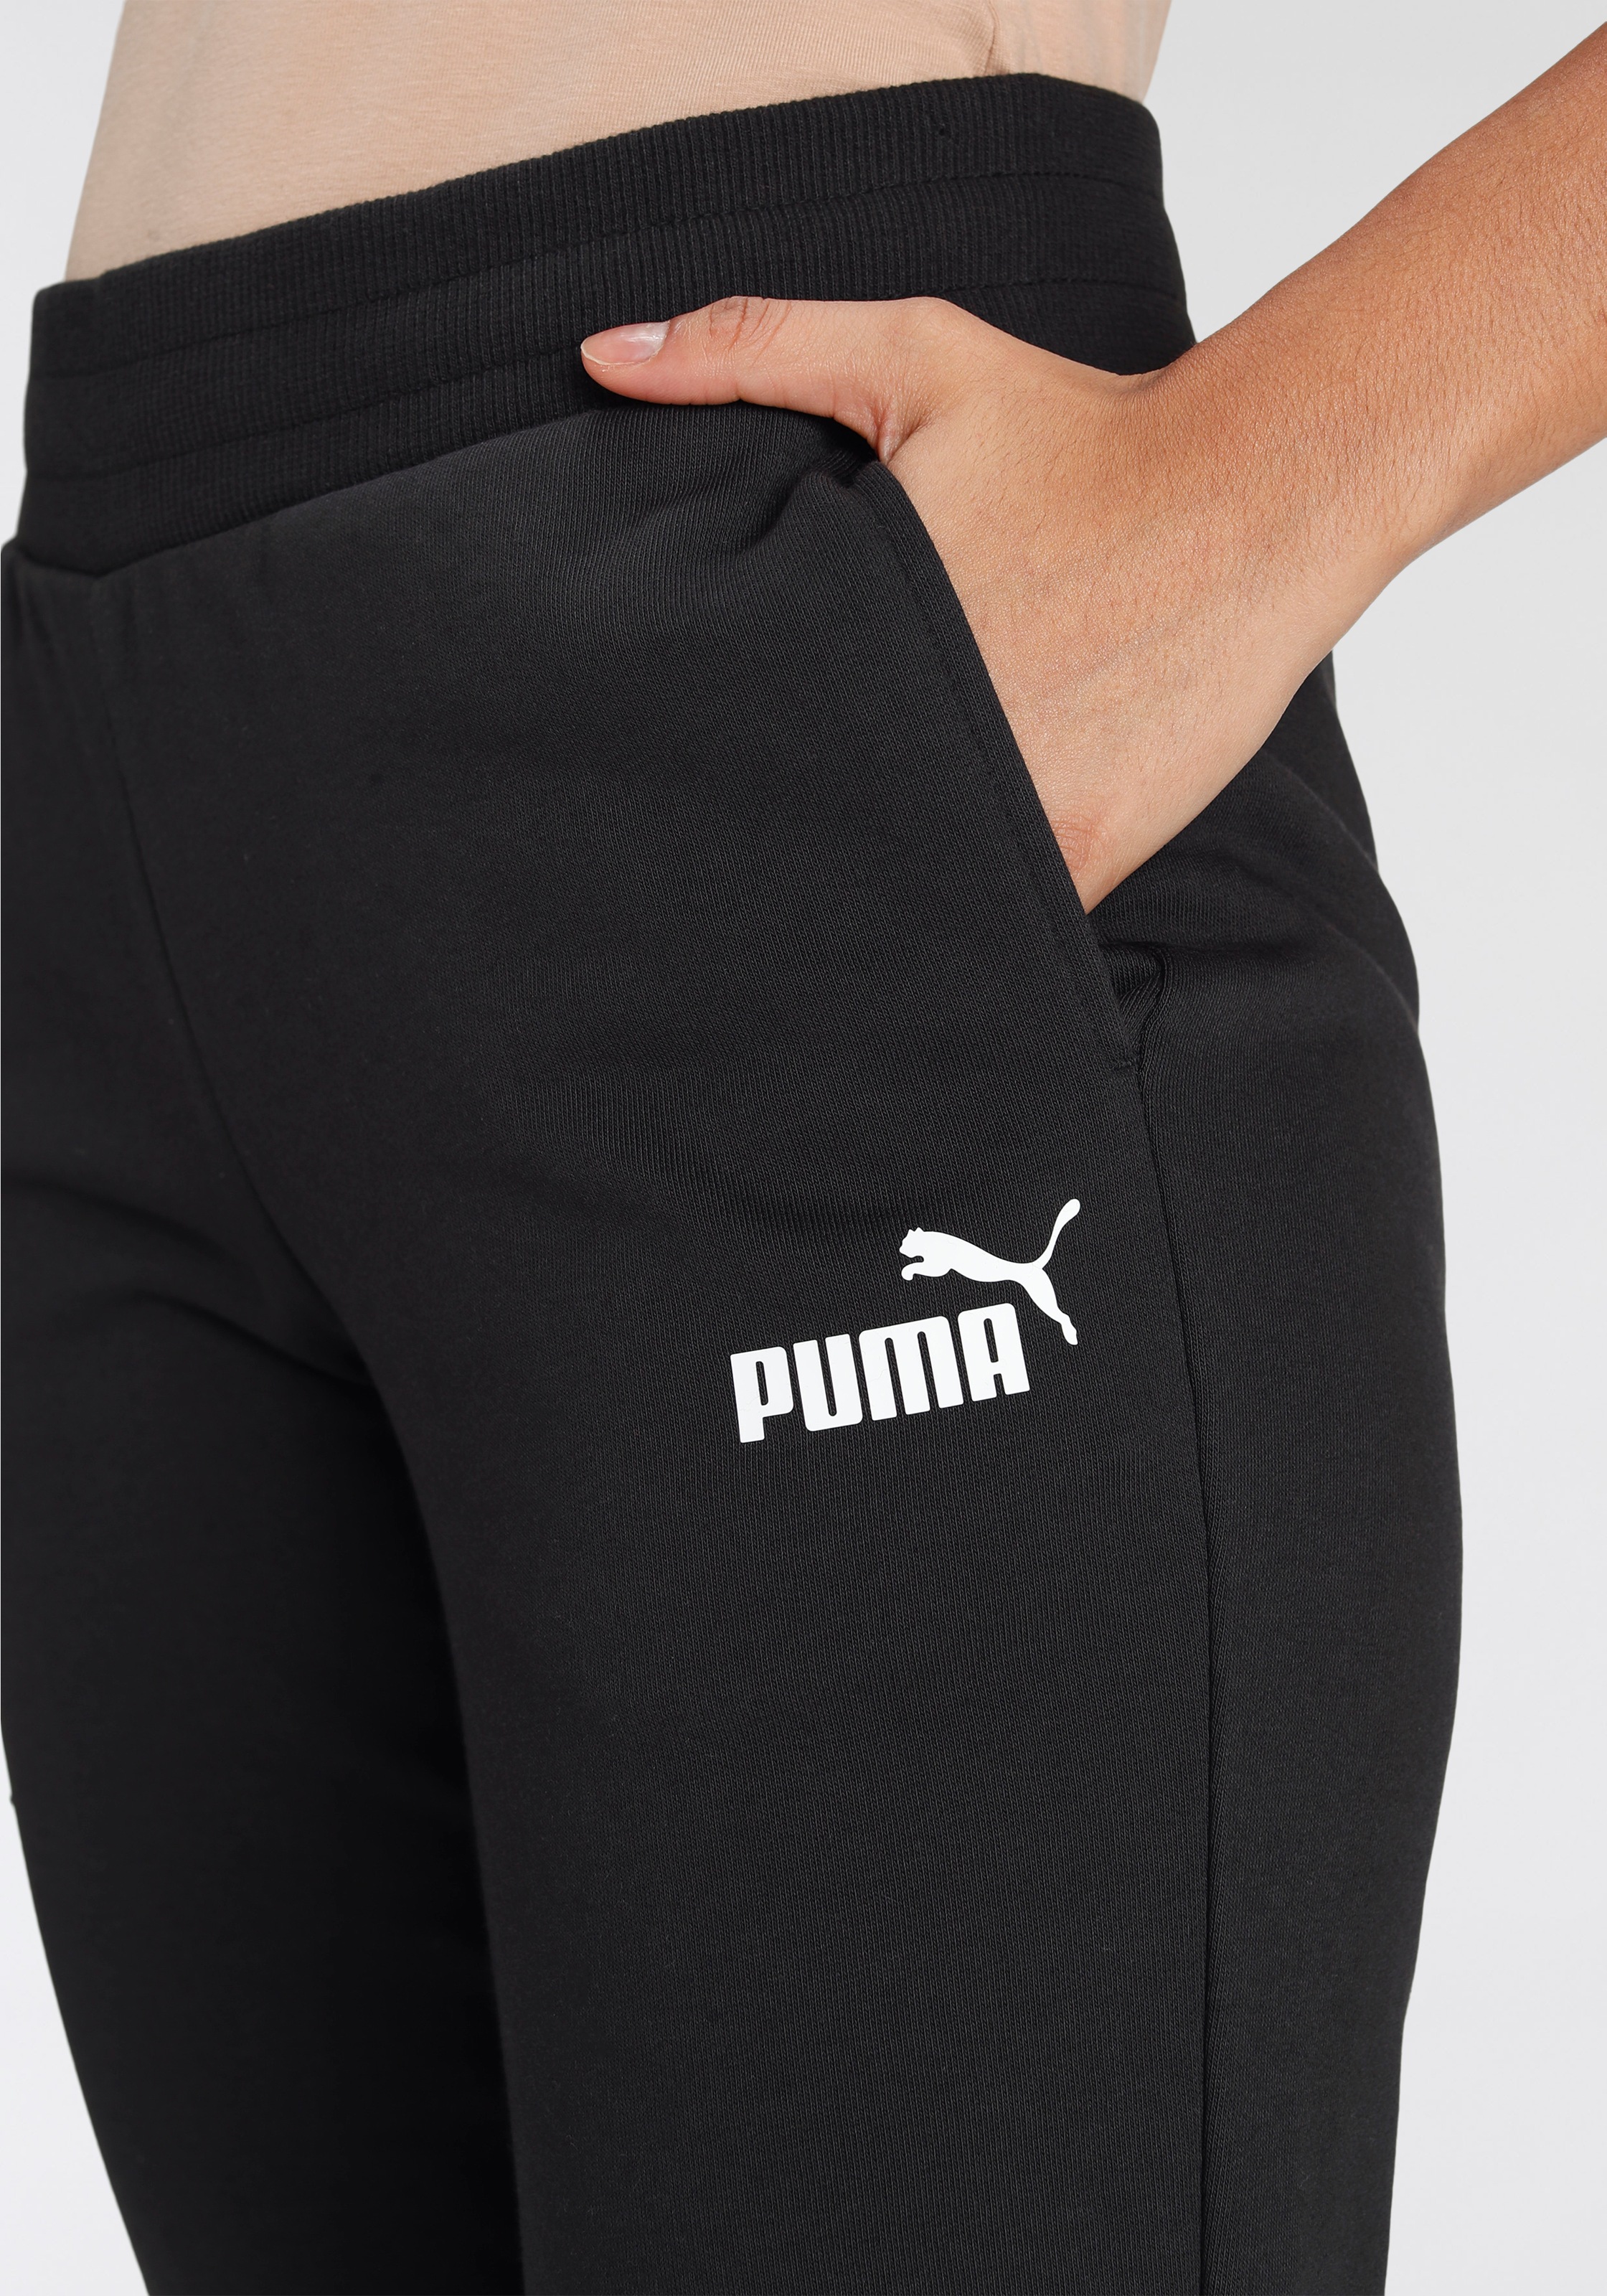 PUMA Jogginghose »PUMA TAPE im OTTO TR« POWER kaufen PANTS Online Shop